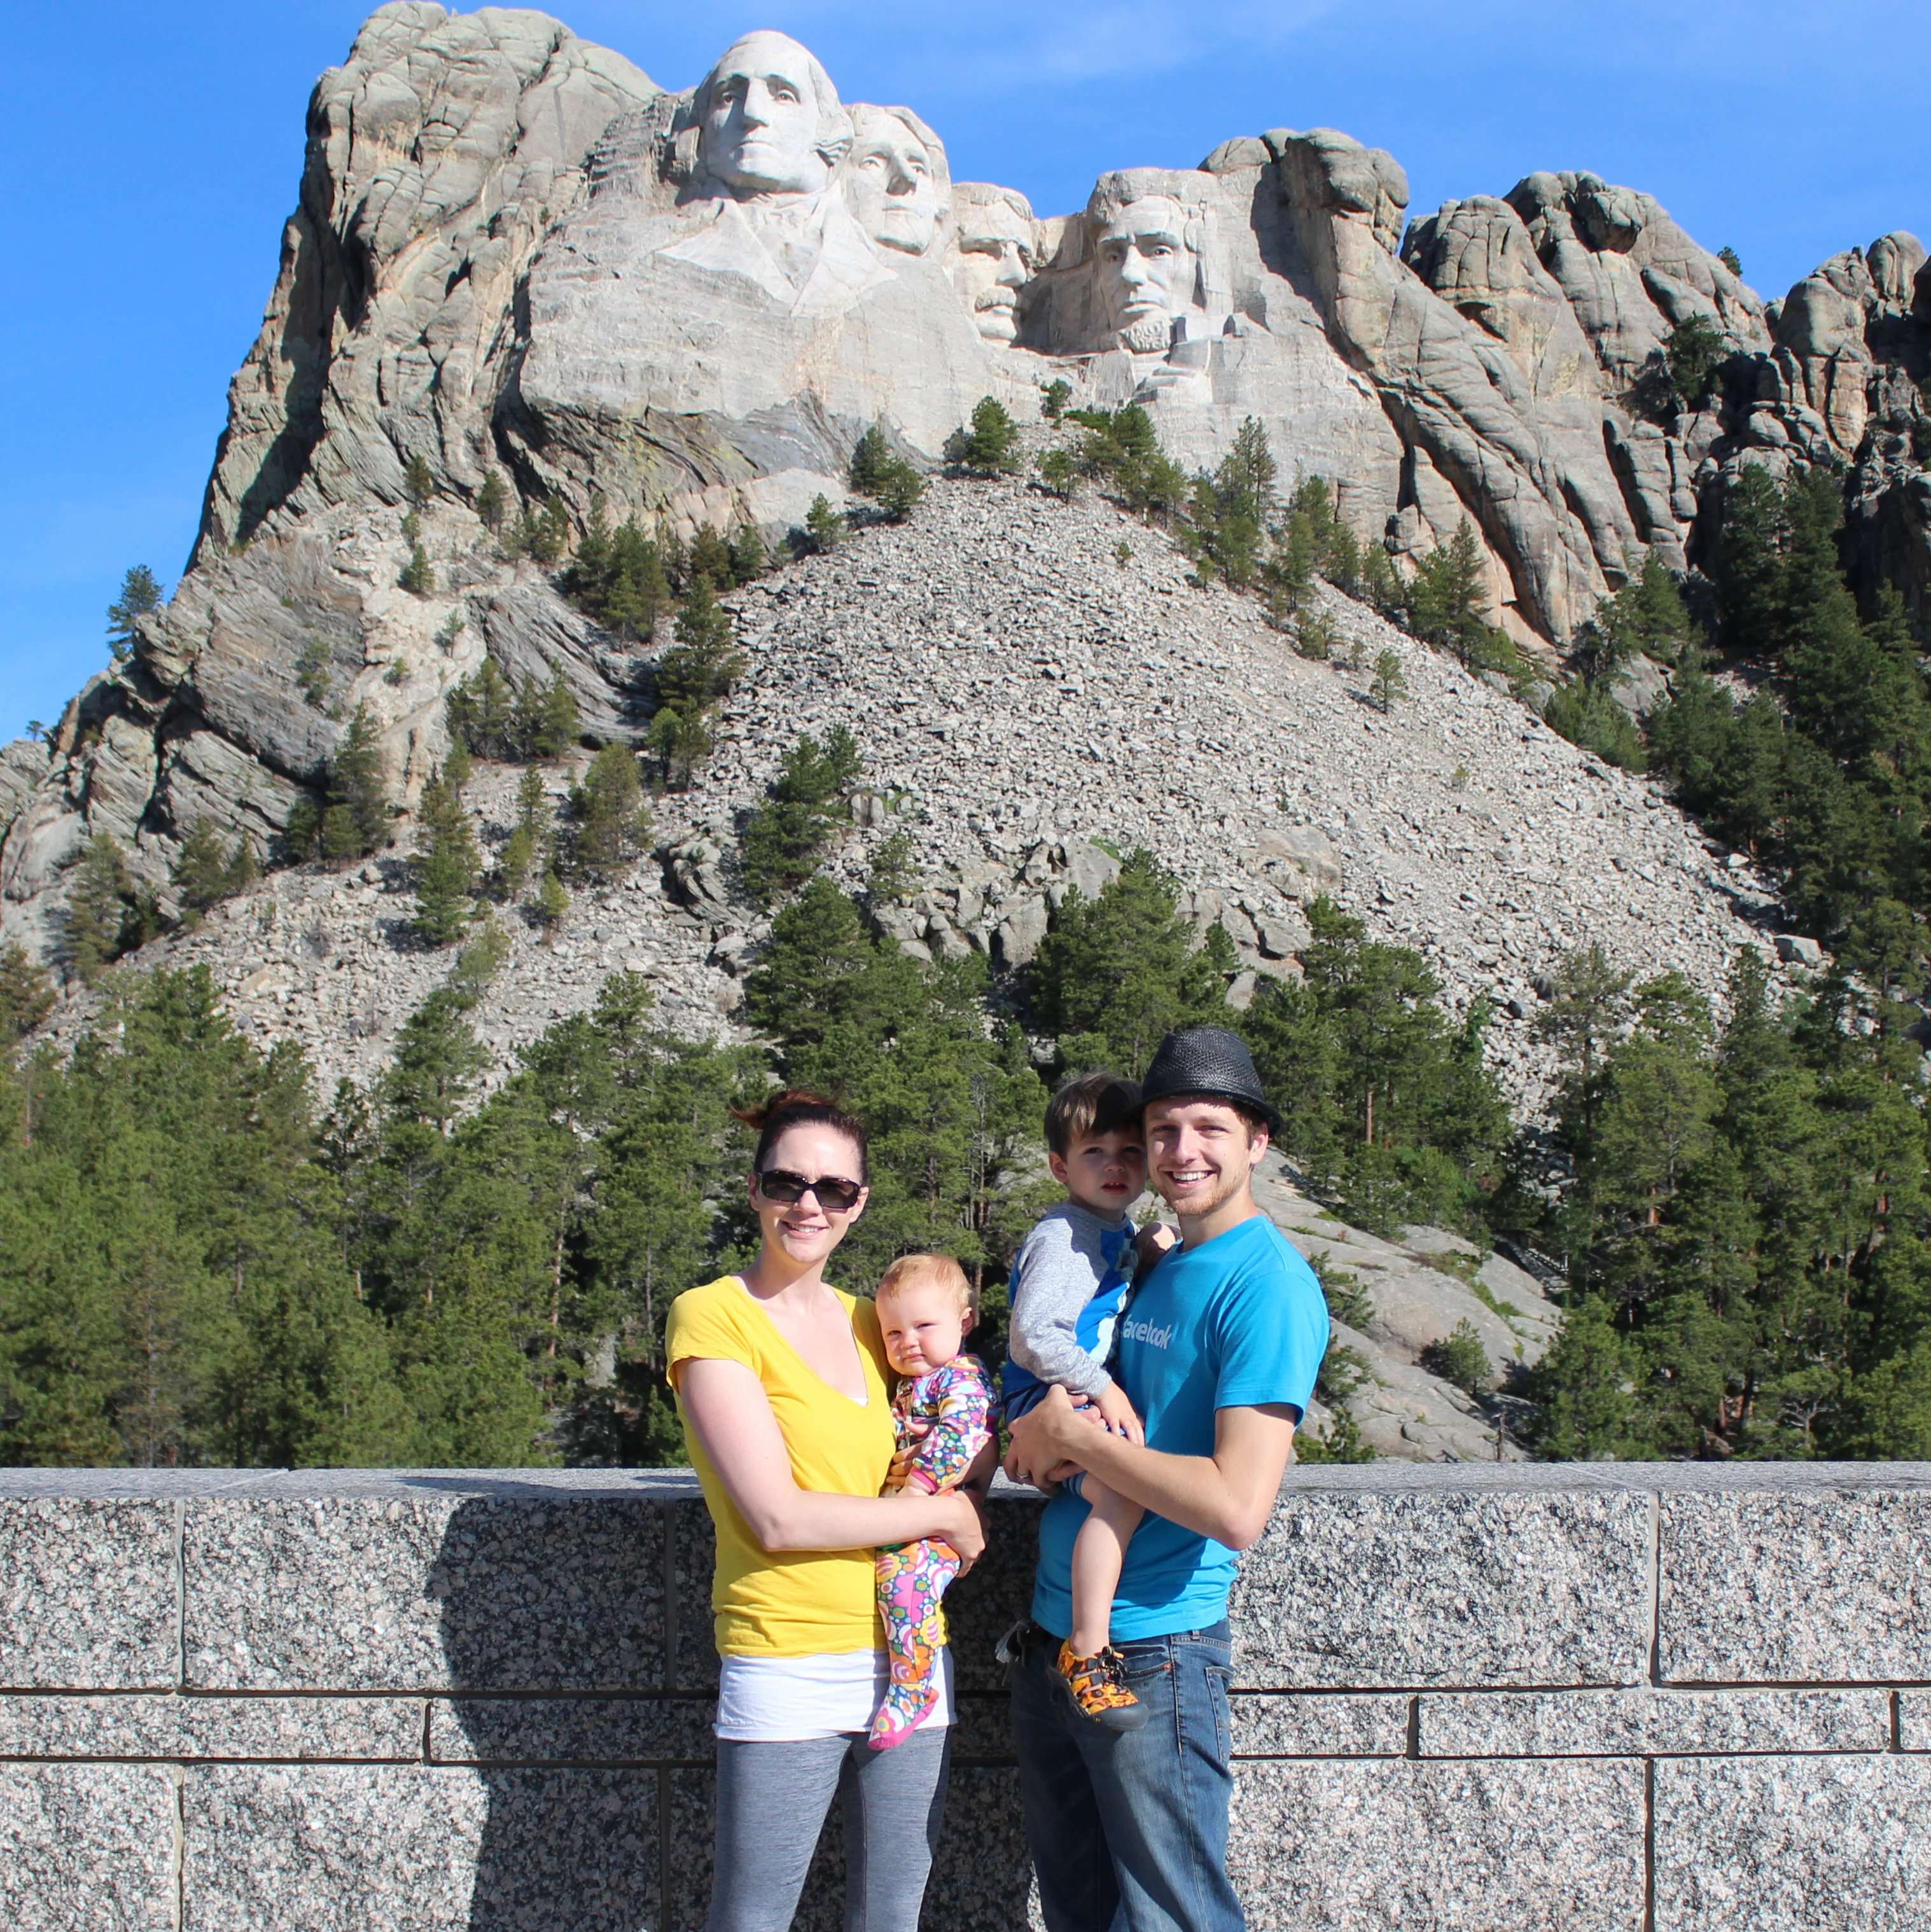 Family photo at Mt. Rushmore.